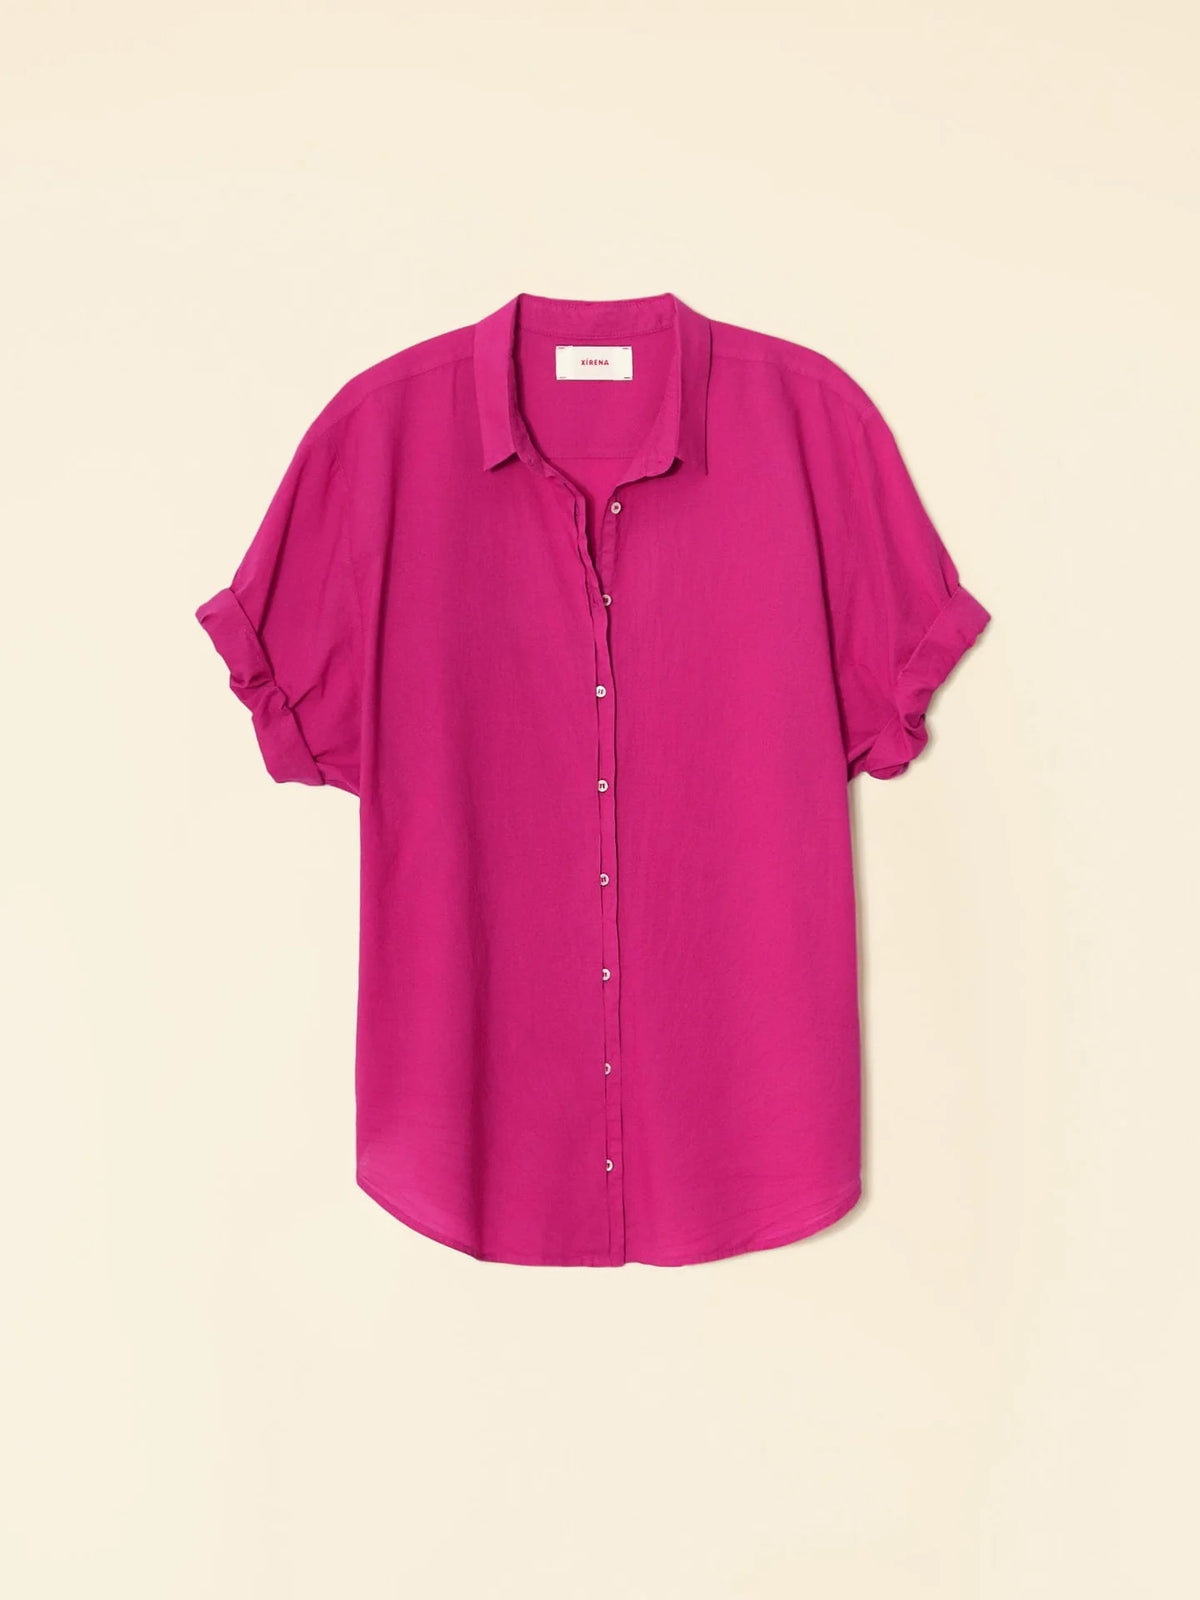 Channing Shirt Pink Plum - JoeyRae